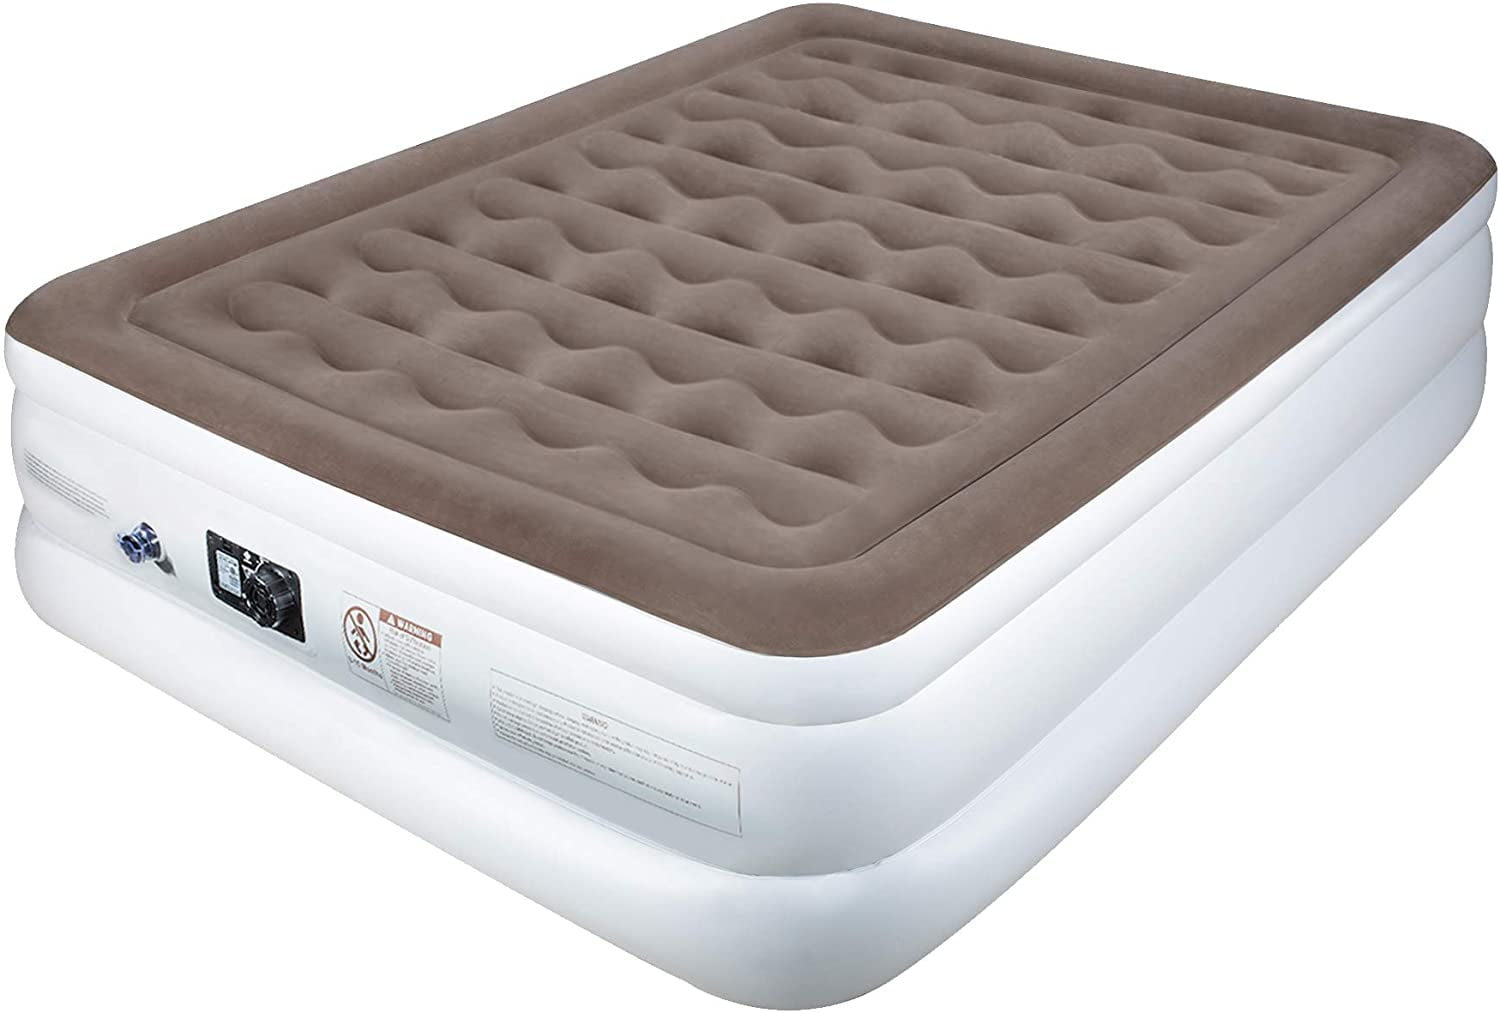 extra large air mattress